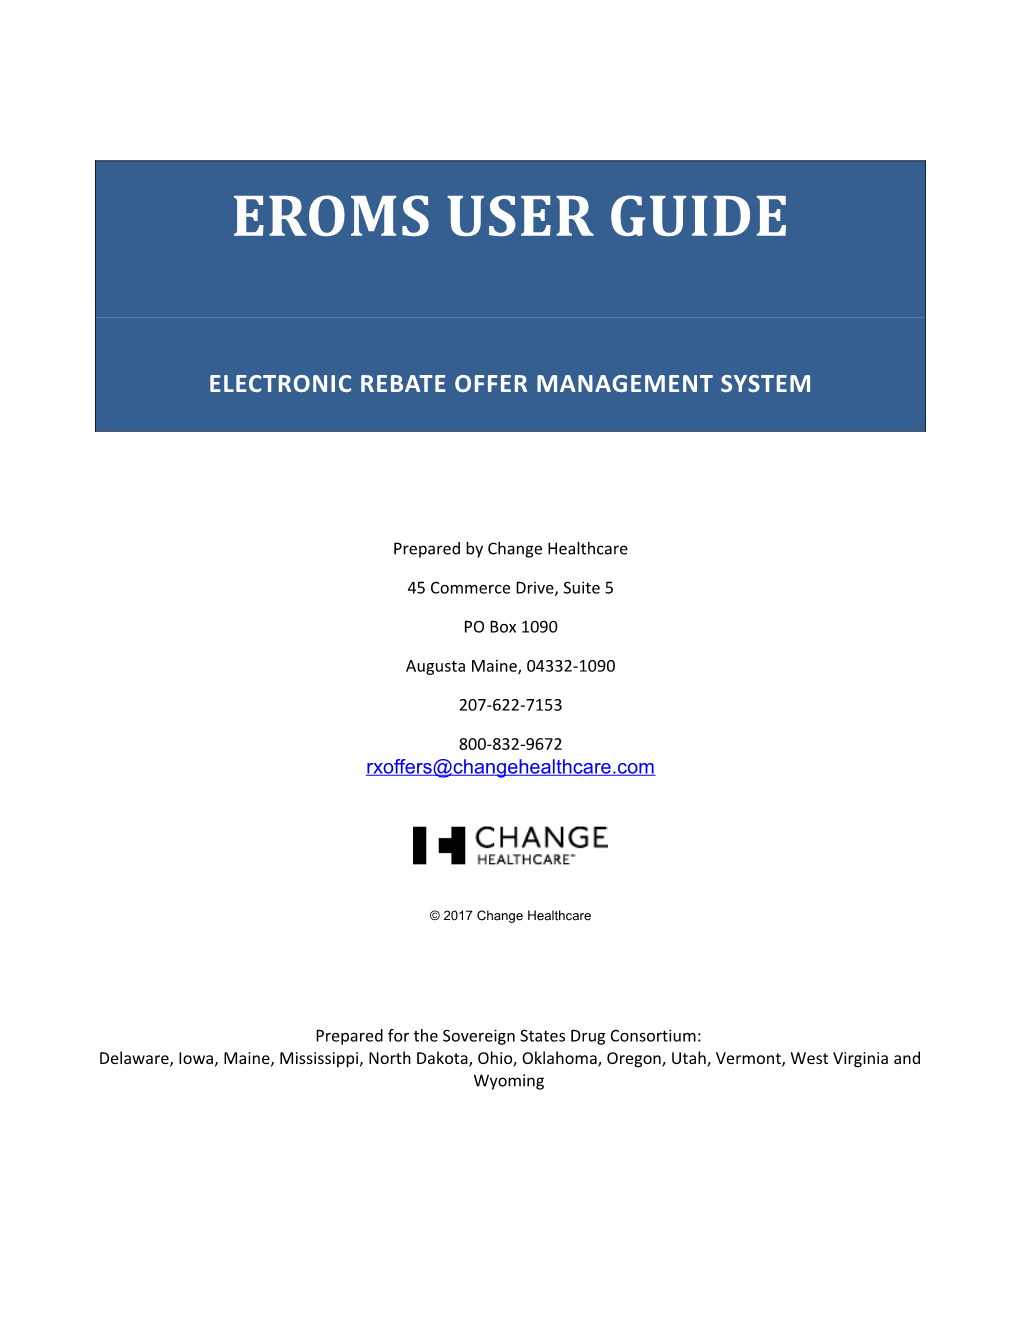 Electronic Rebate Offer Management System